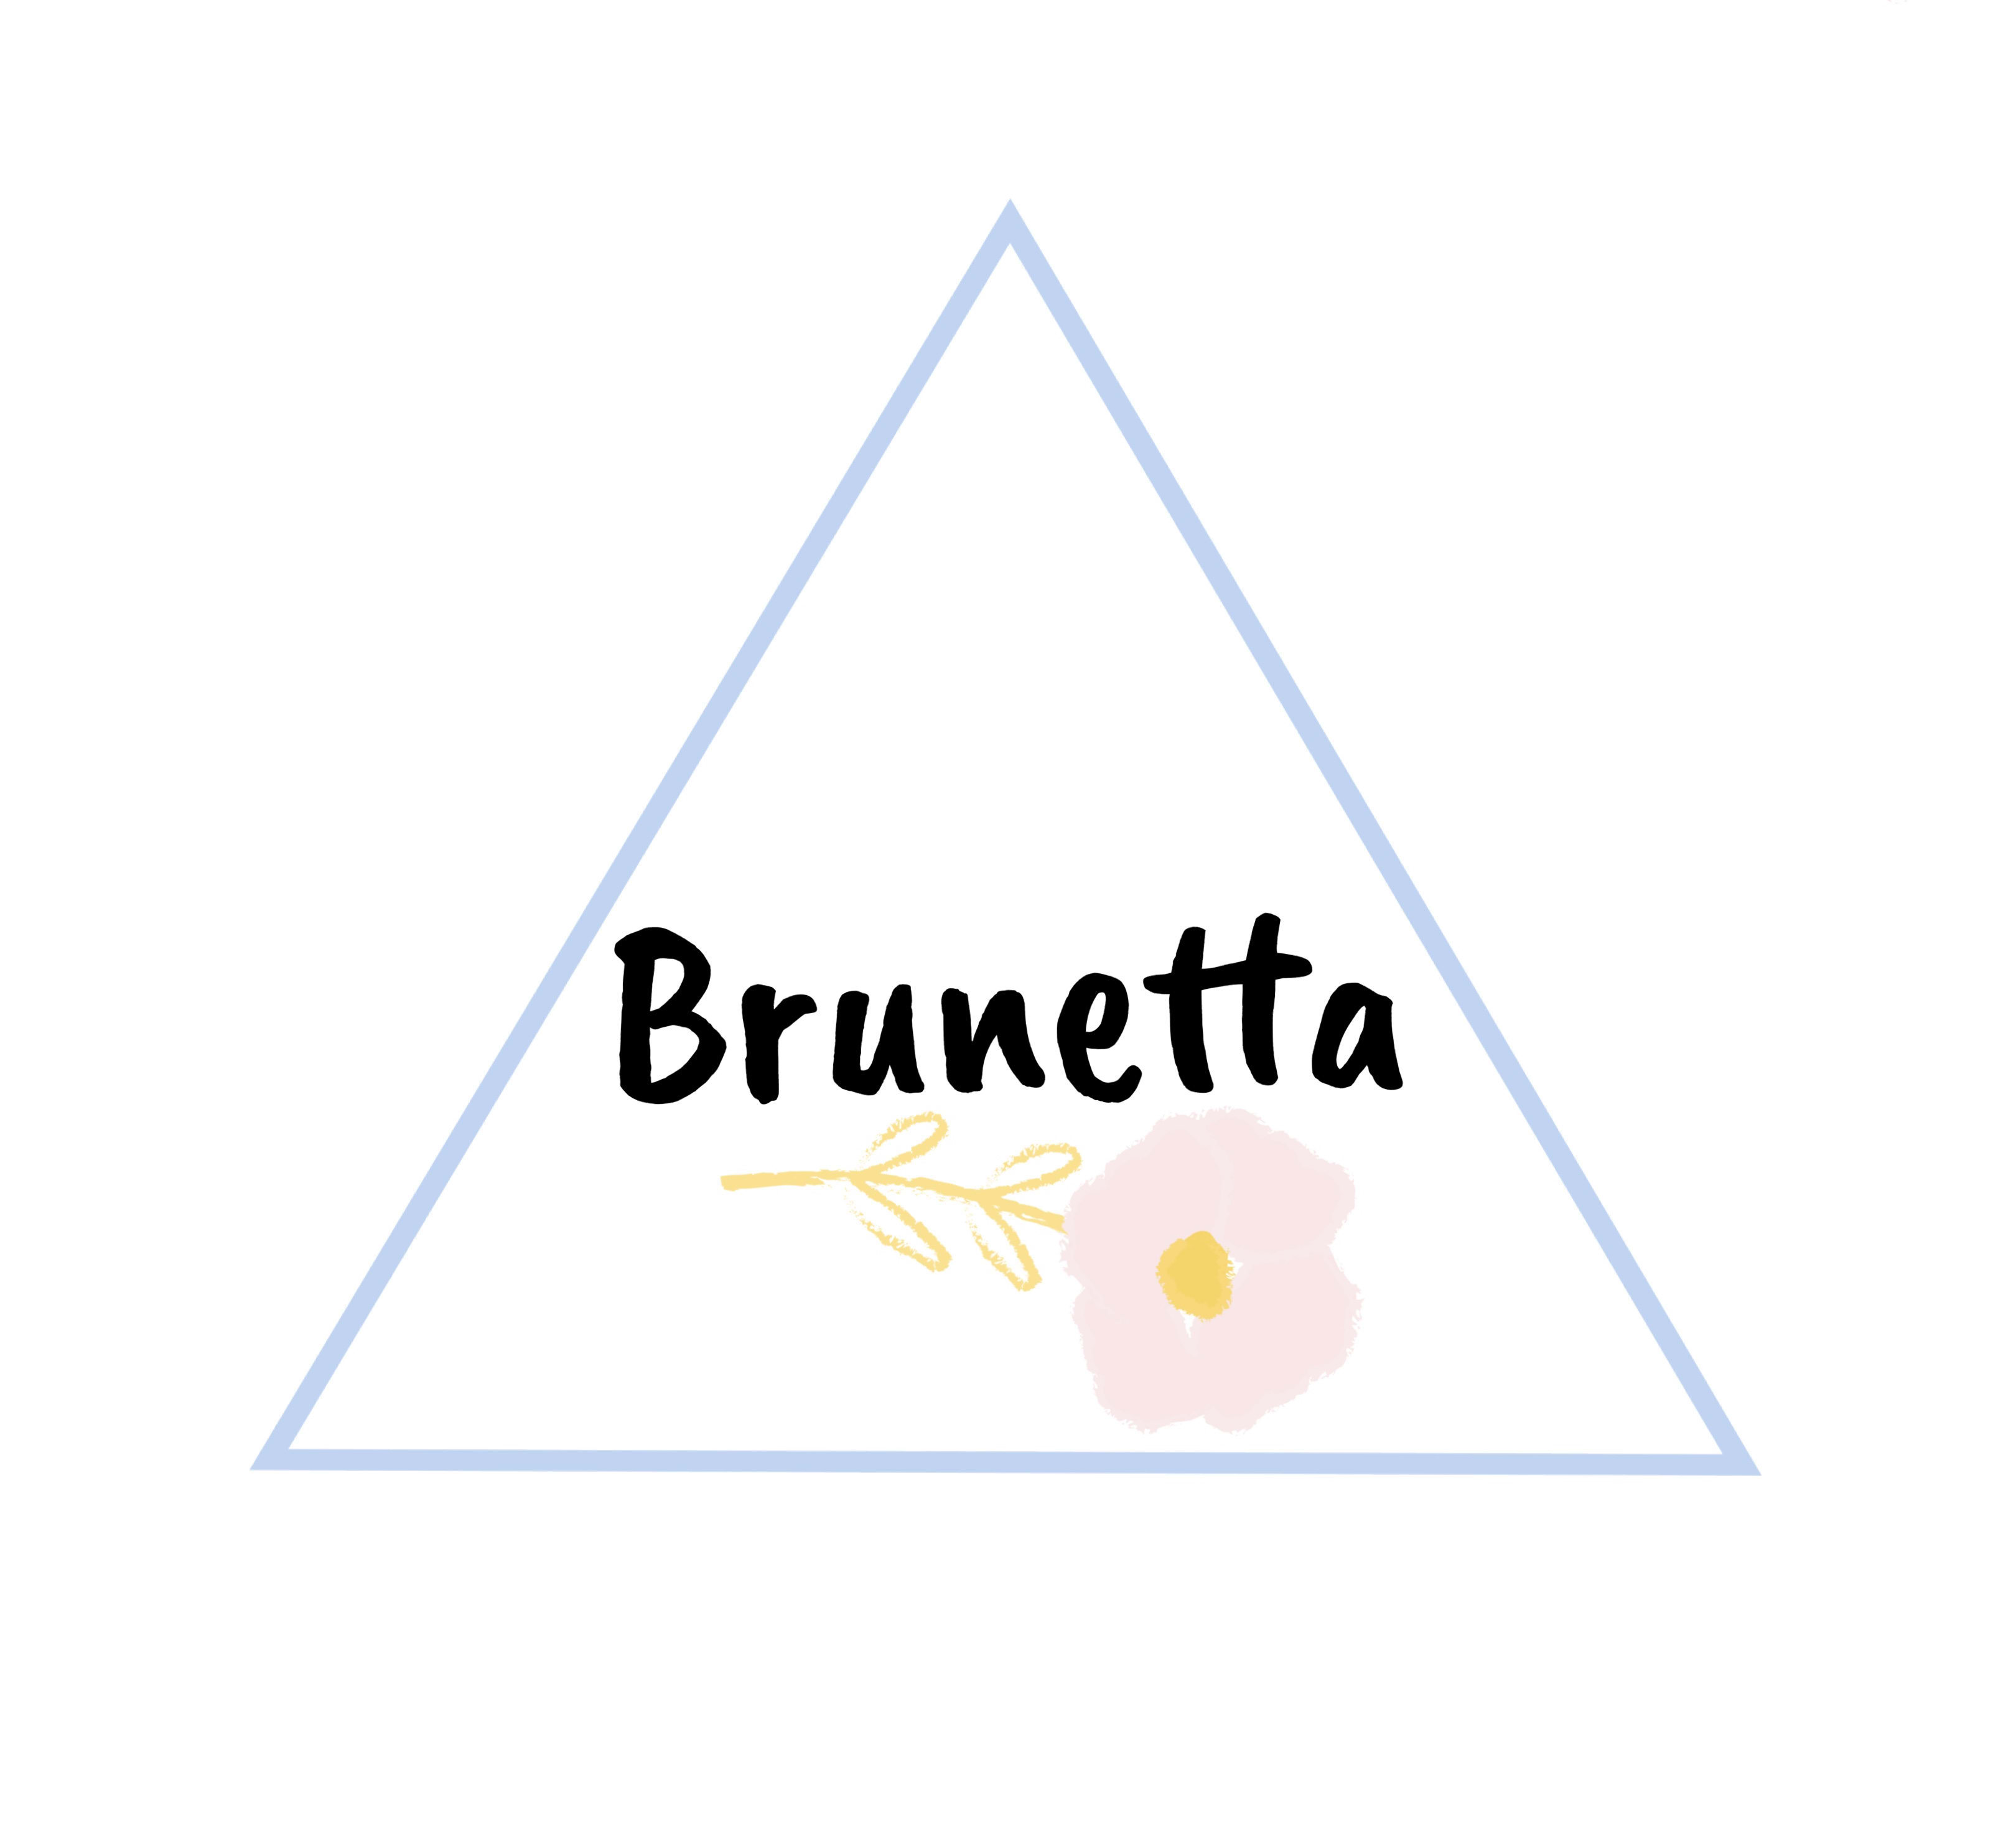 Brunetta